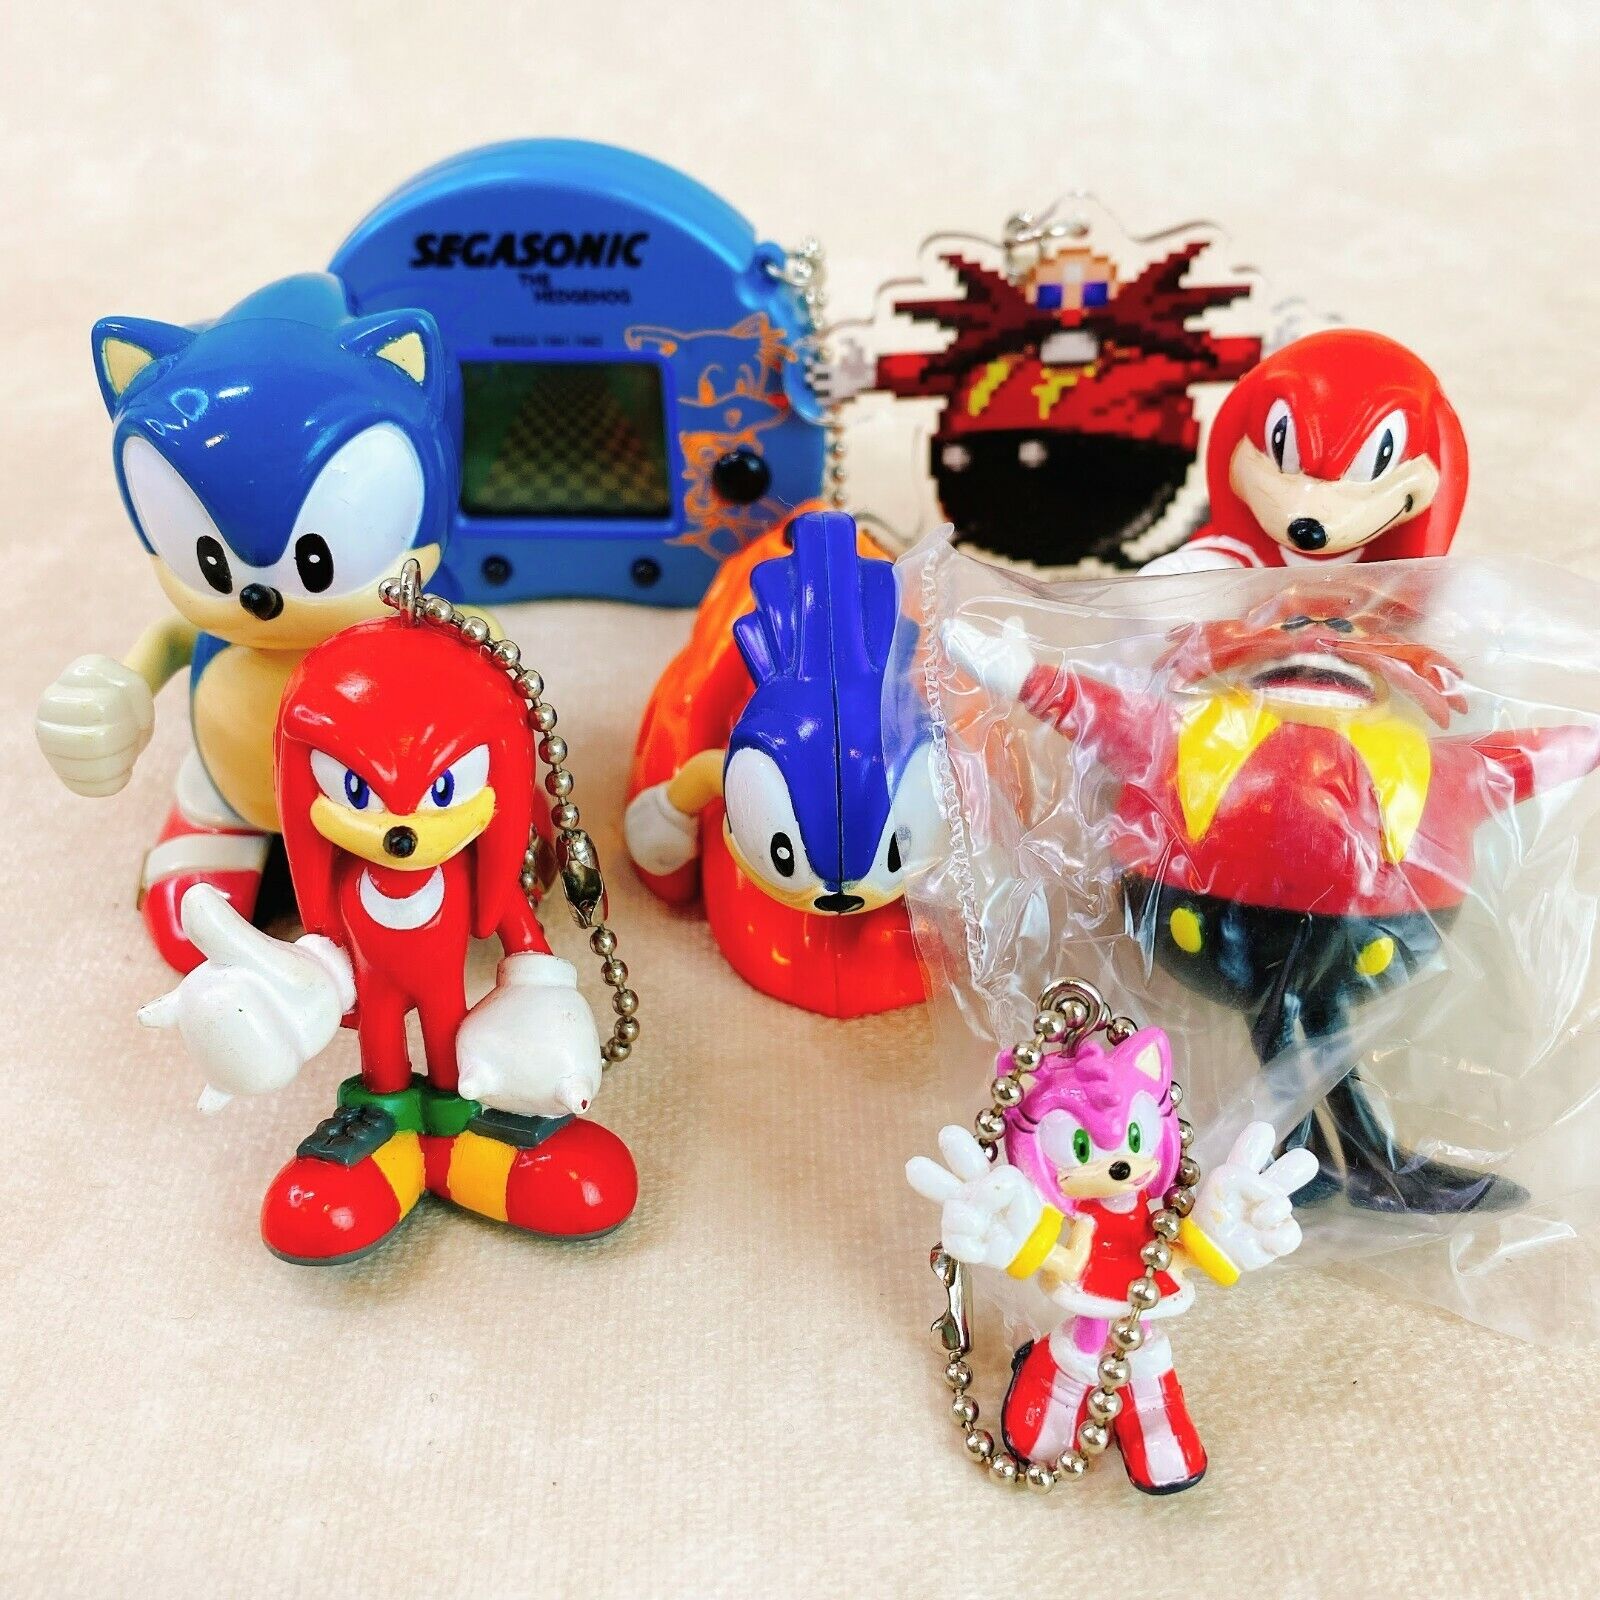 Rare 90s SEGA Sonic the Hedgehog knuckles Amy figure toy set Bulk sale retro